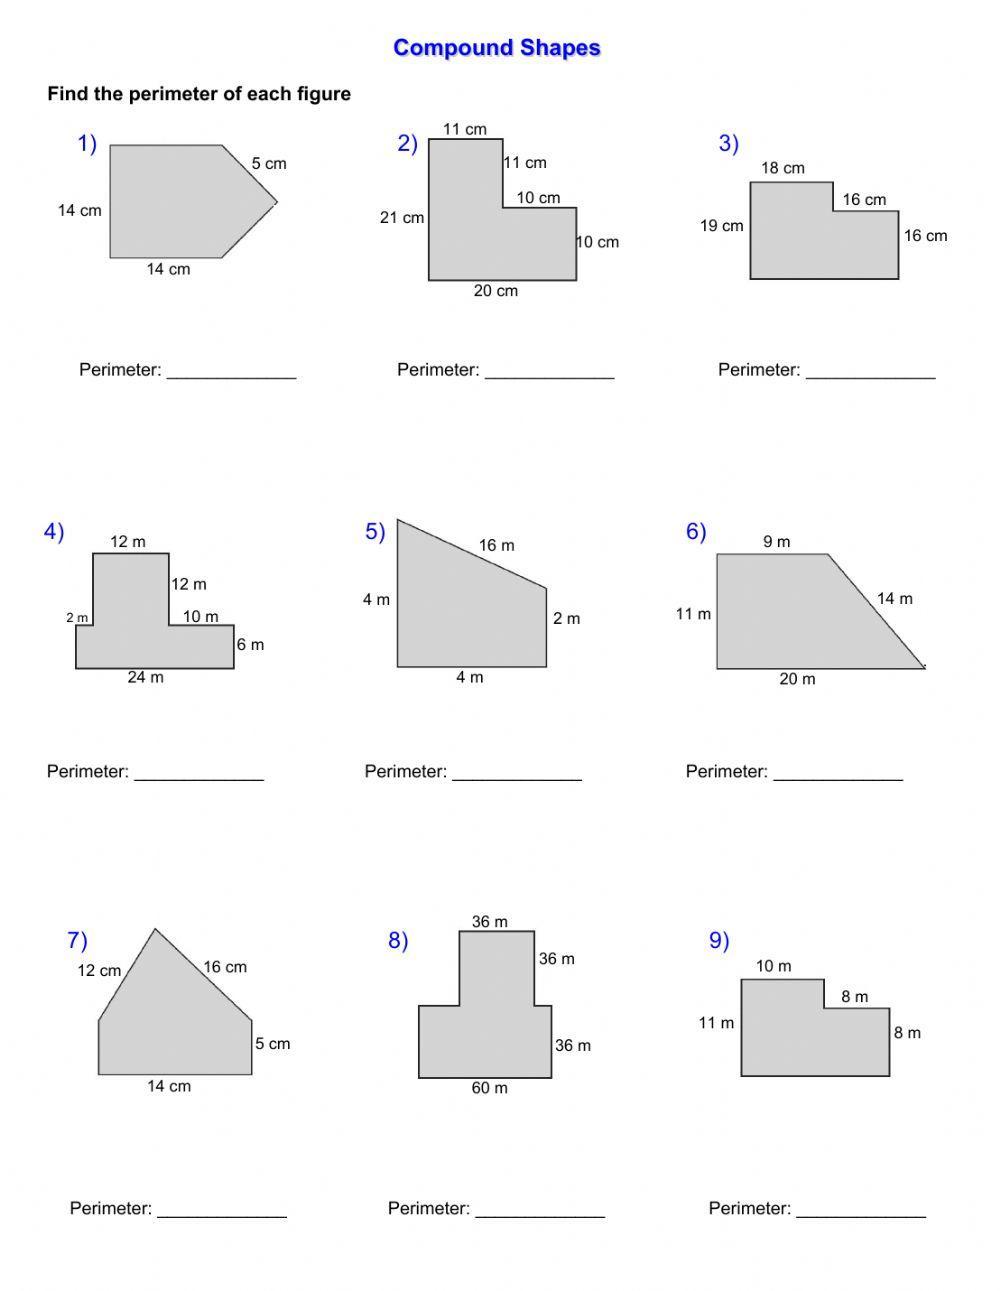 Perimeter of compund shapes